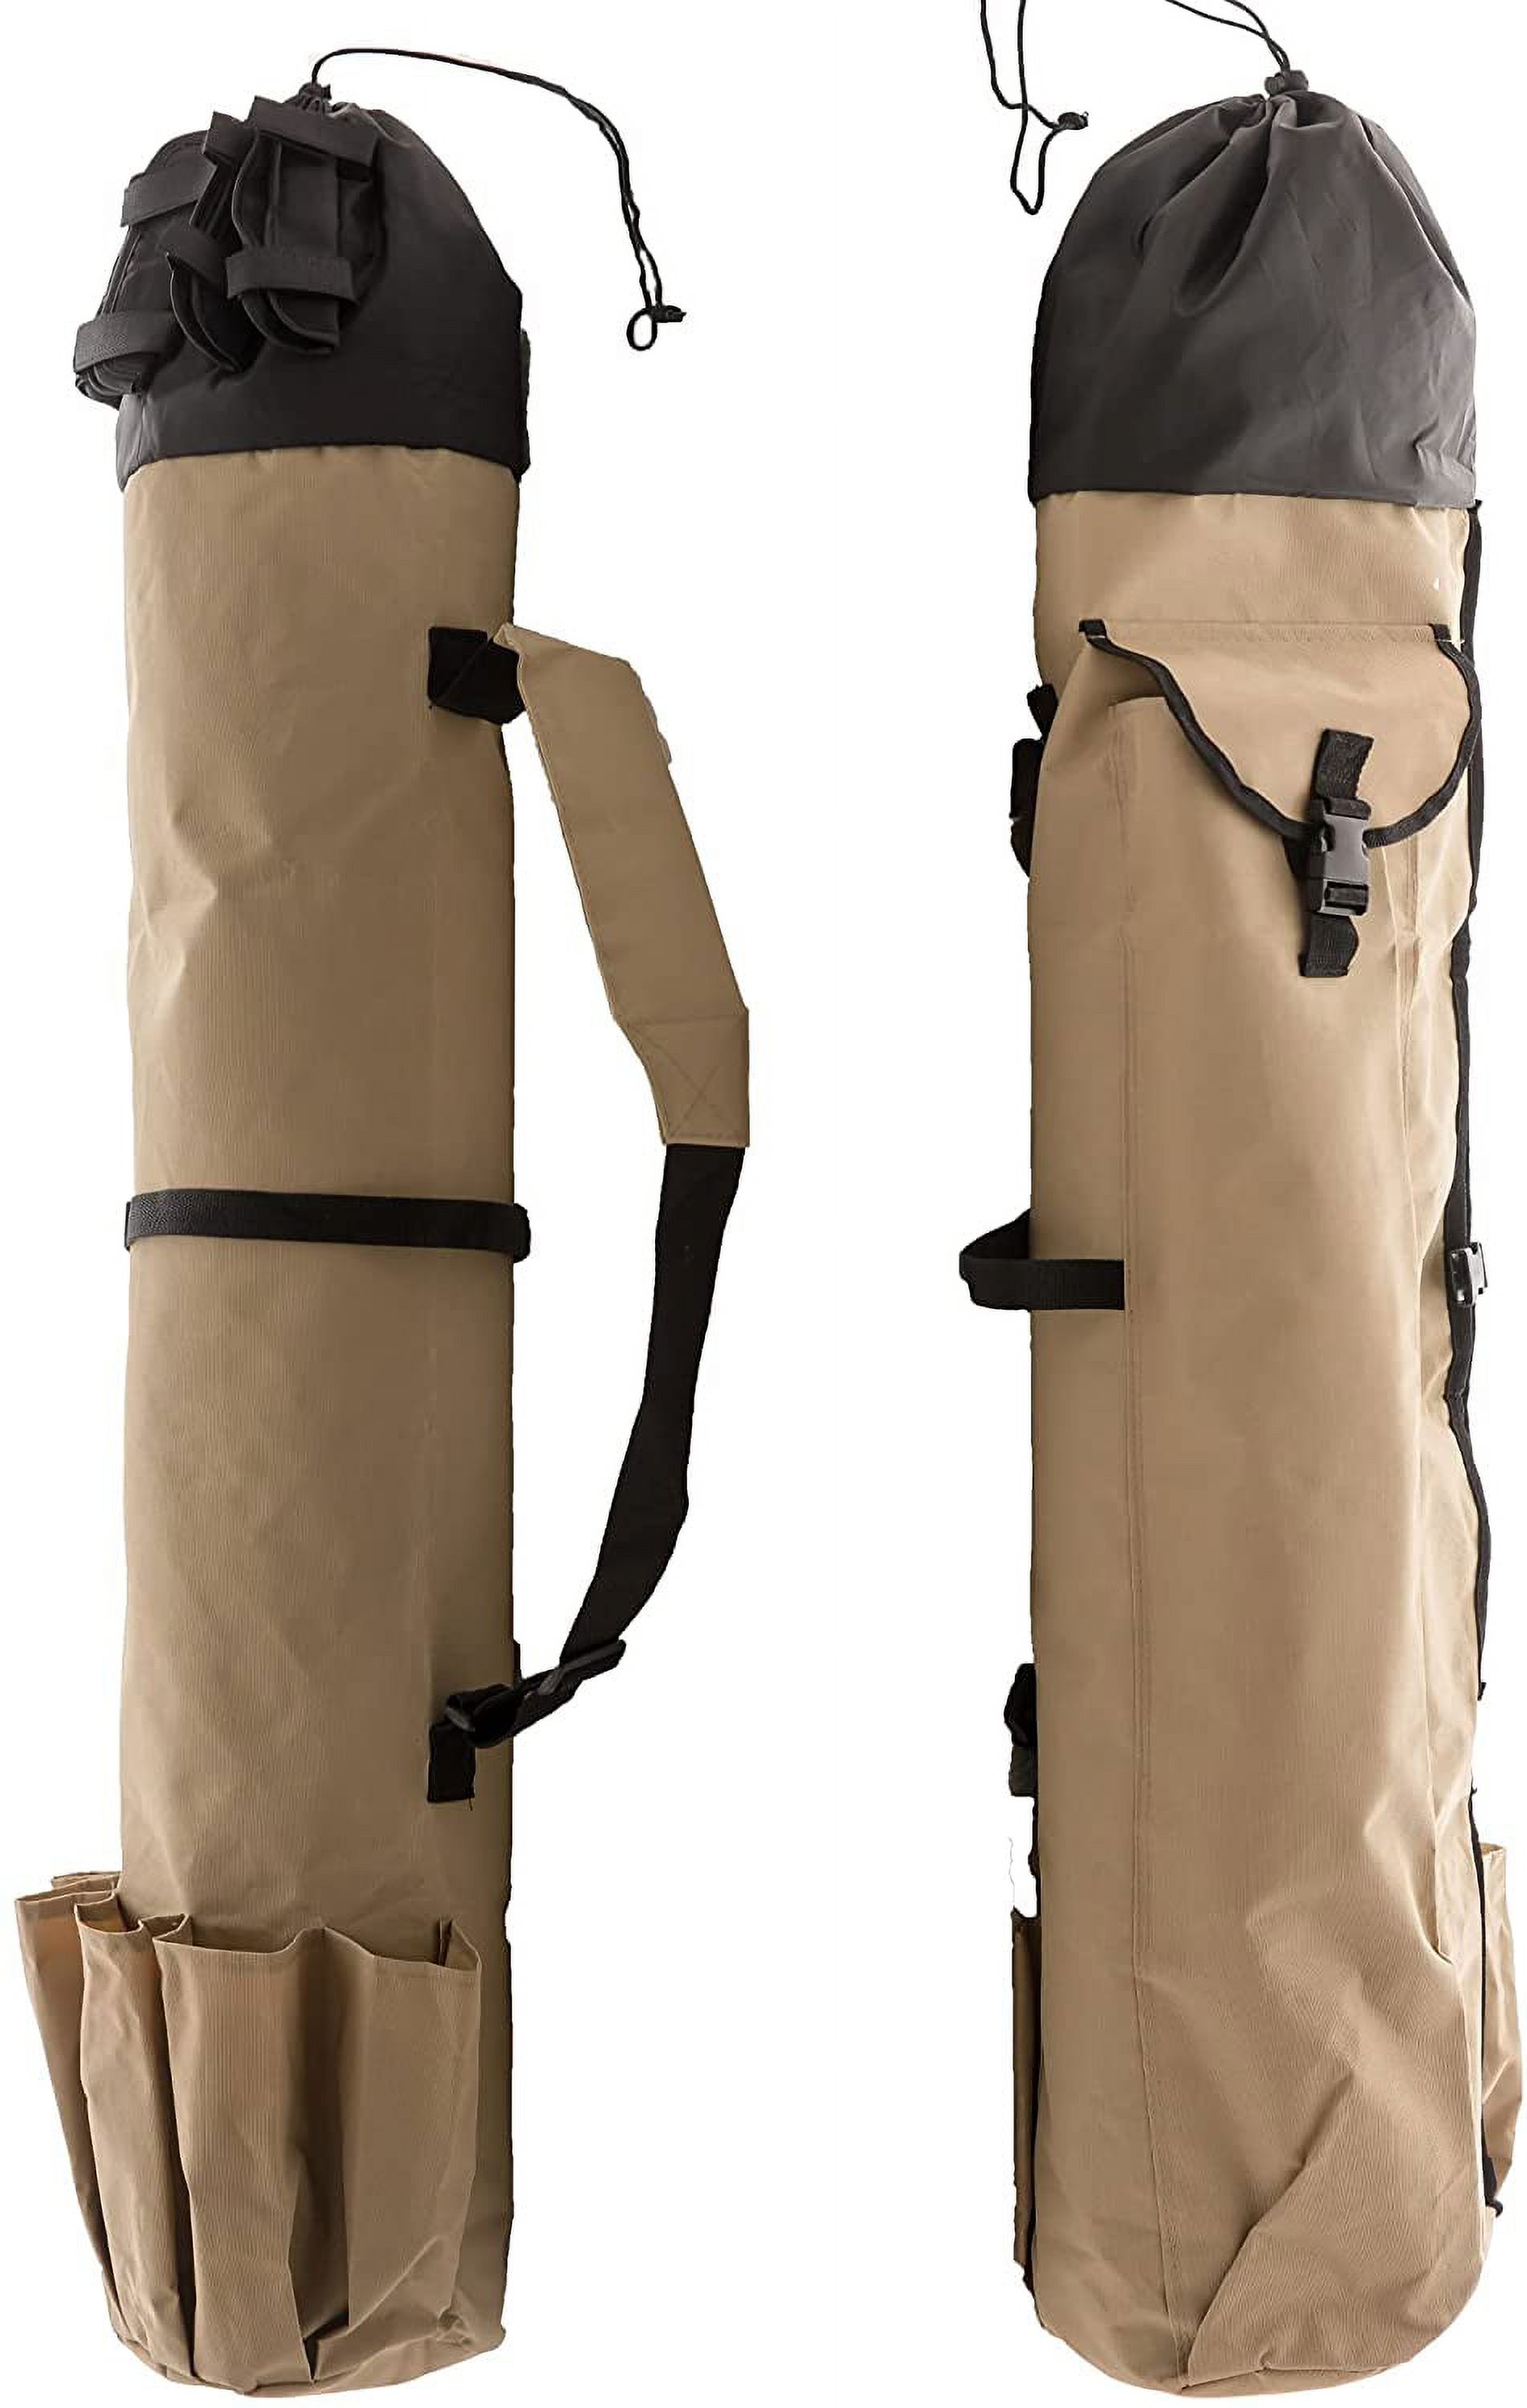 Fishing Rod Bag Carrier Canvas Tackle Reel Storage Organizer Holder - image 3 of 12